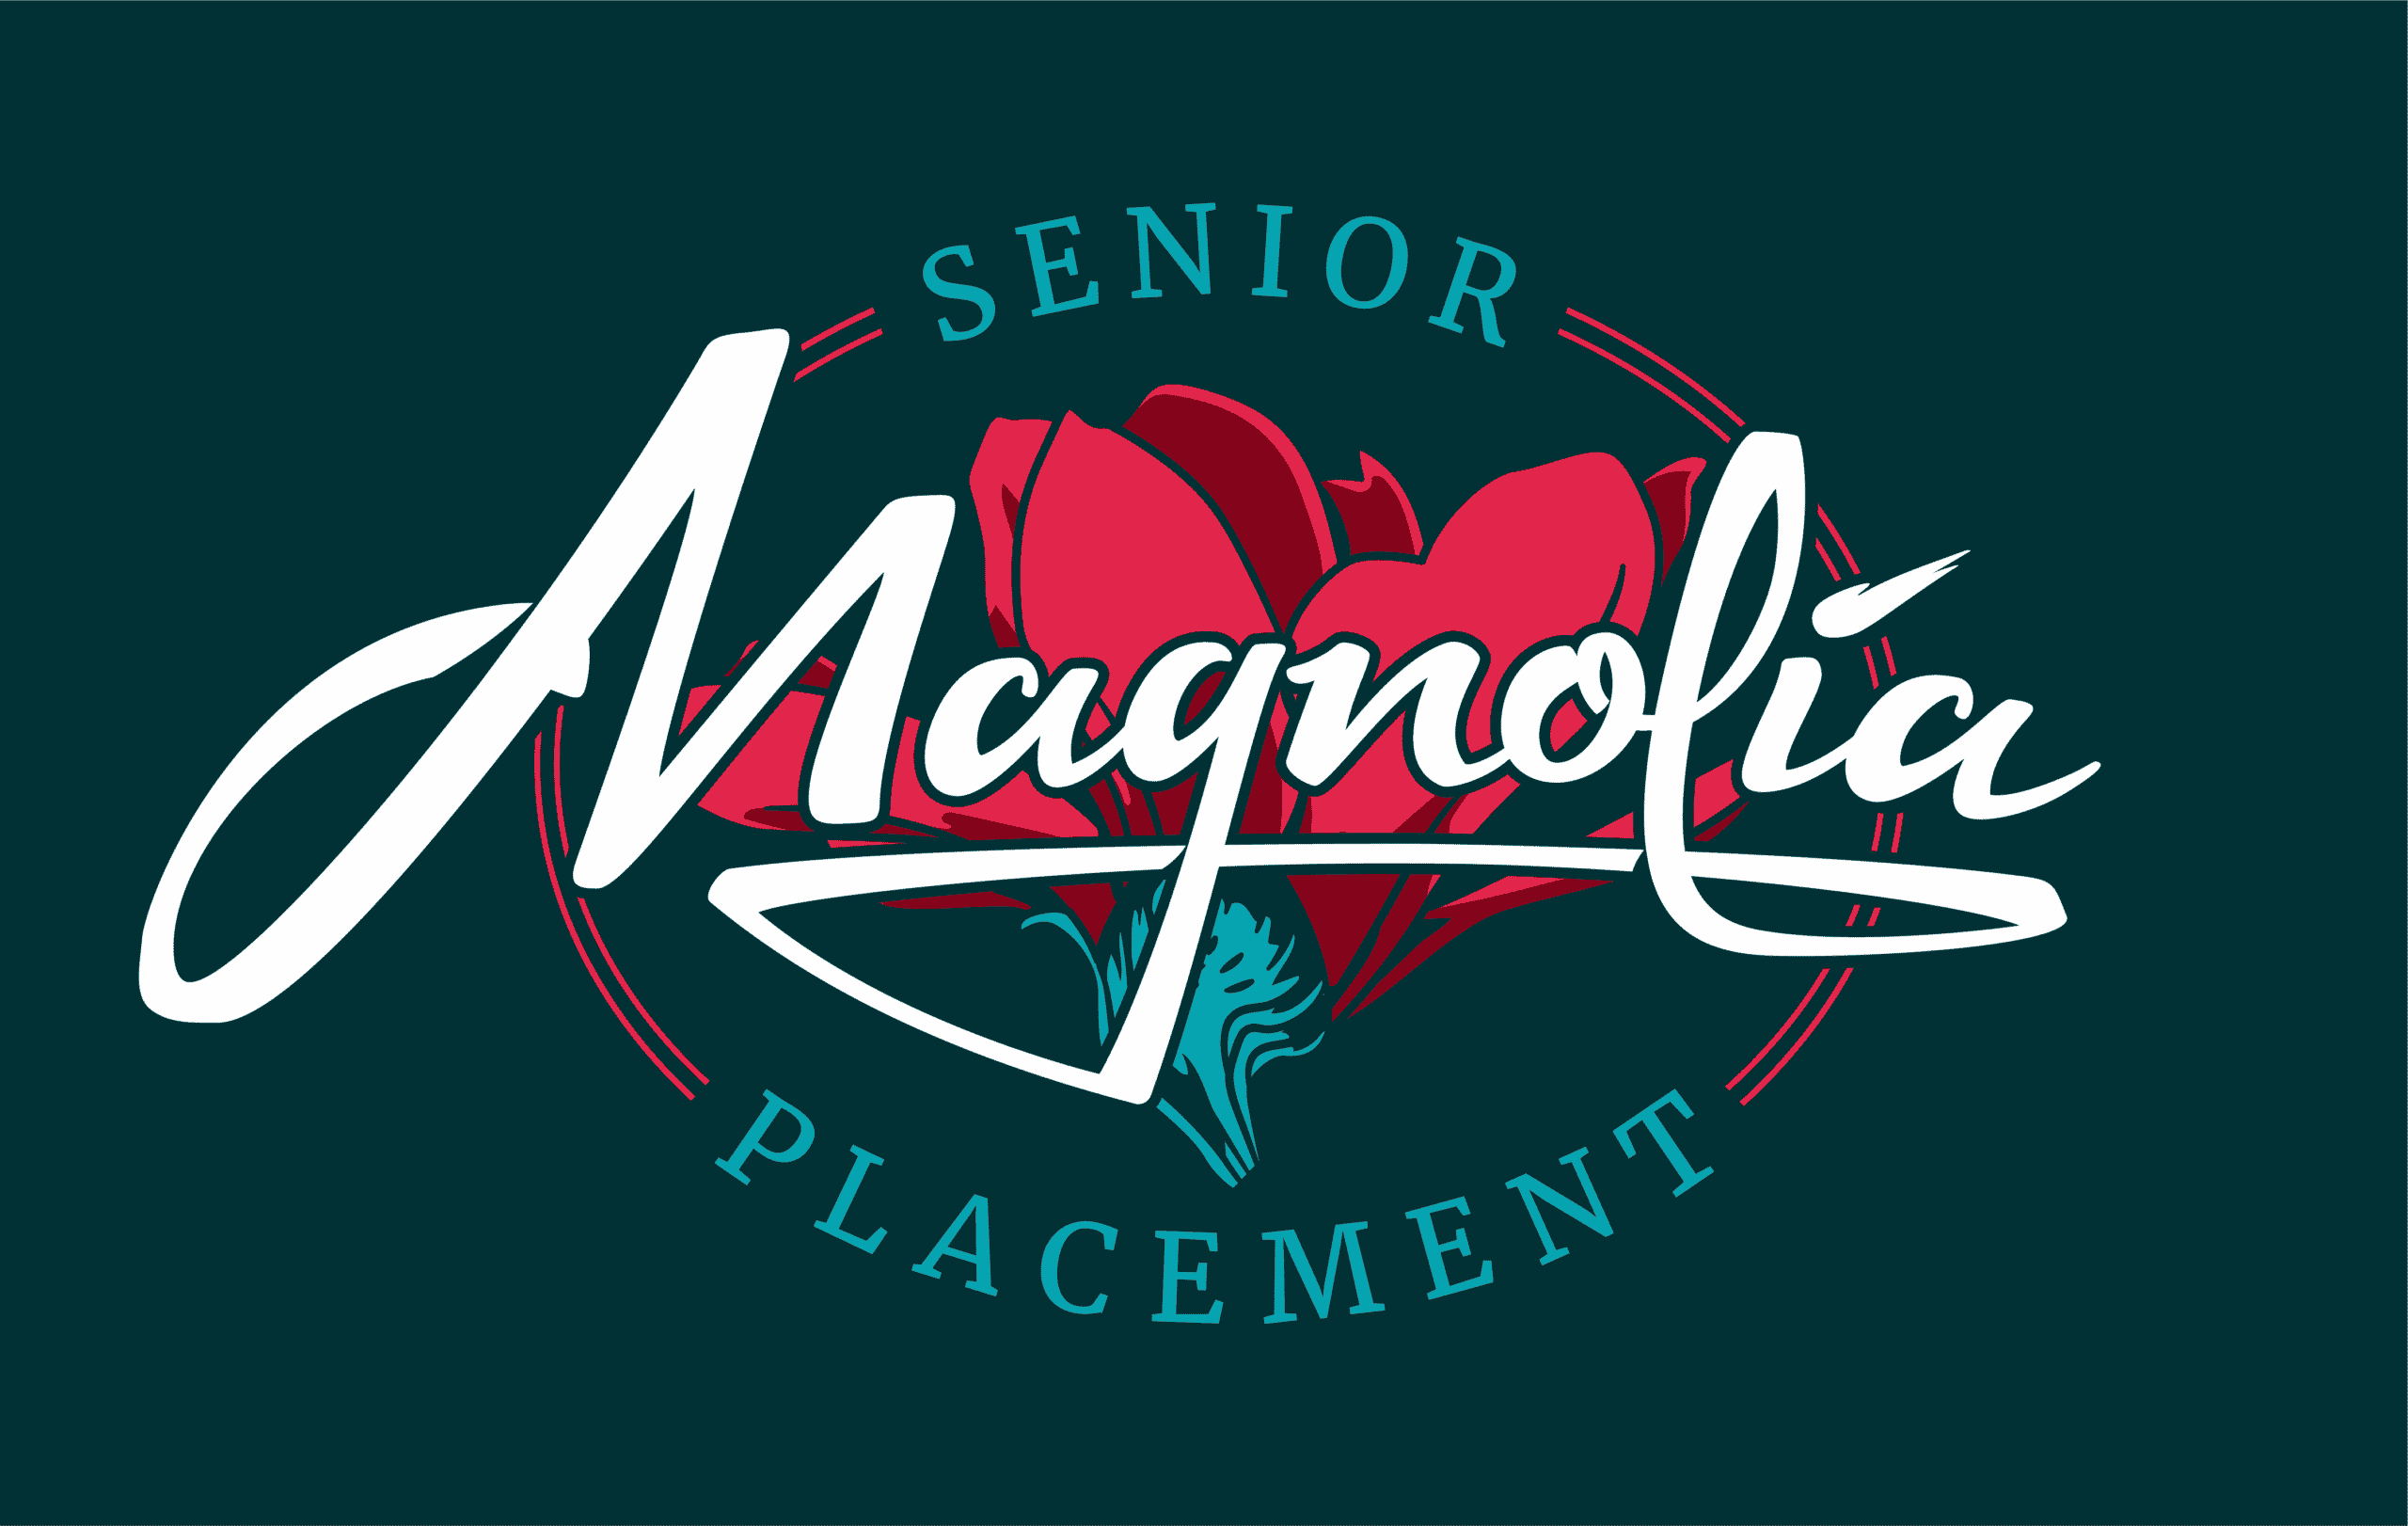 (c) Magnoliawa.com